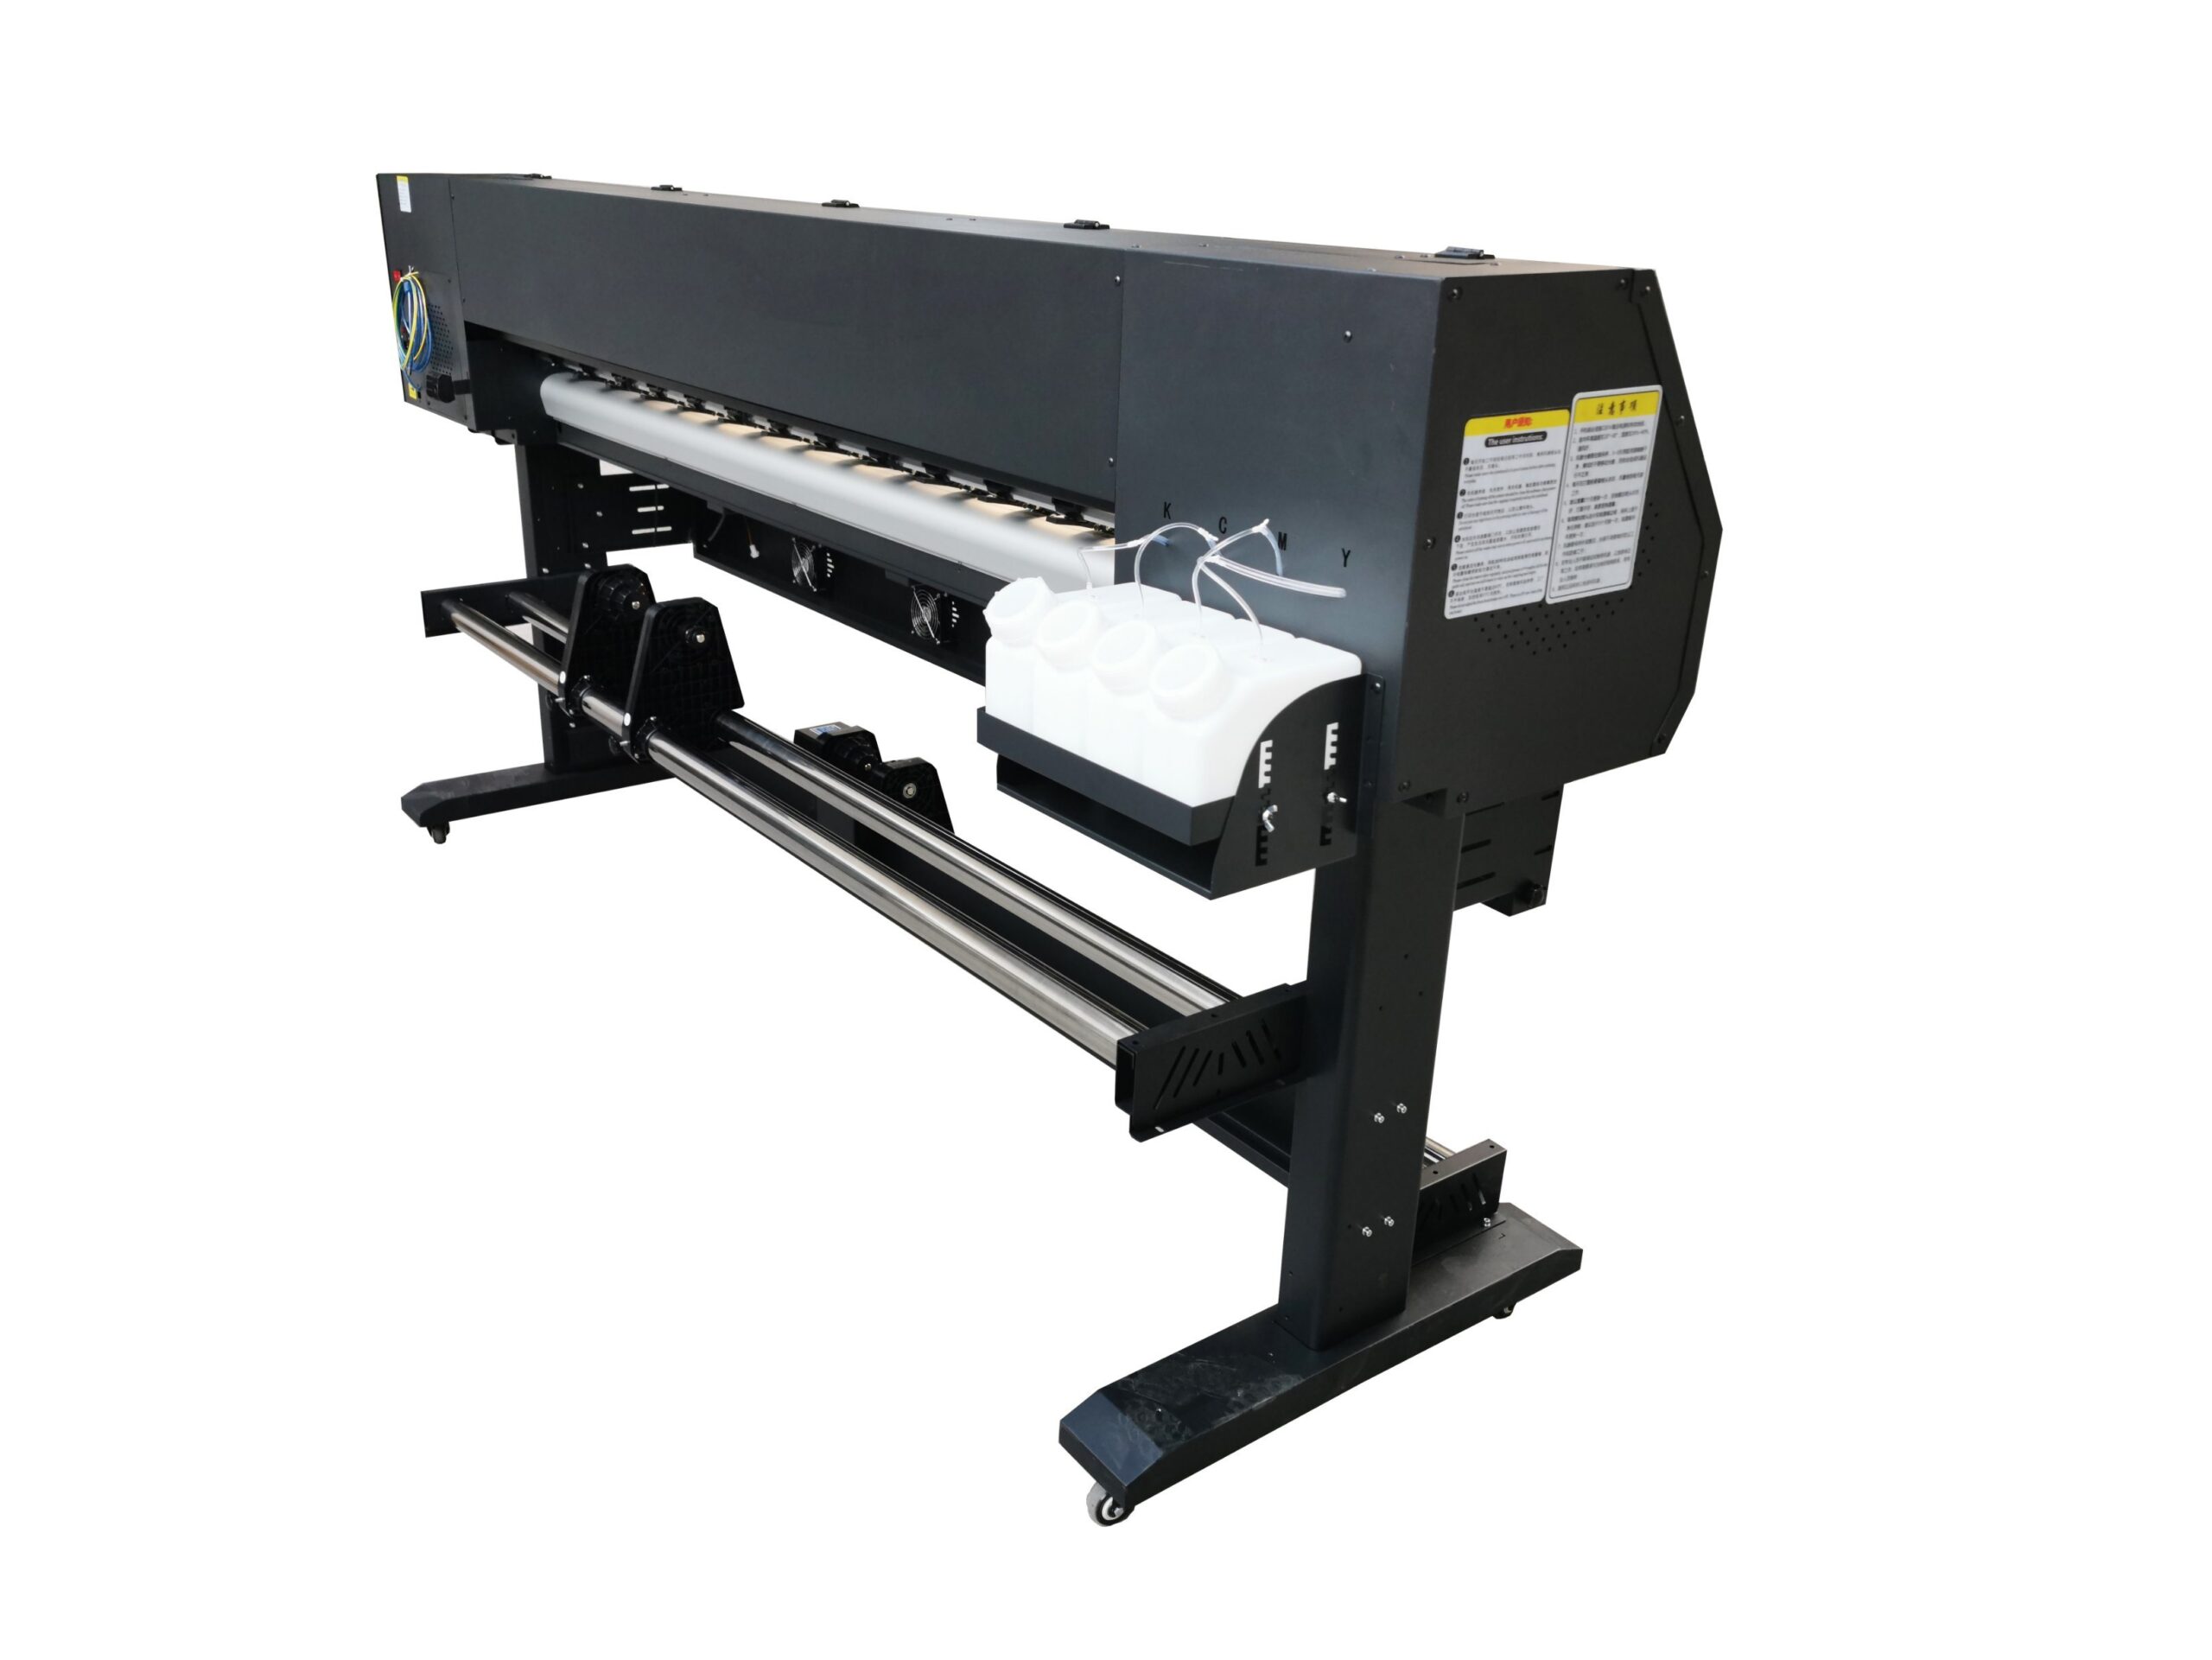 2021-Hot-Printer-XP600-Print-Head-1-8m-Wide-Format-Printer